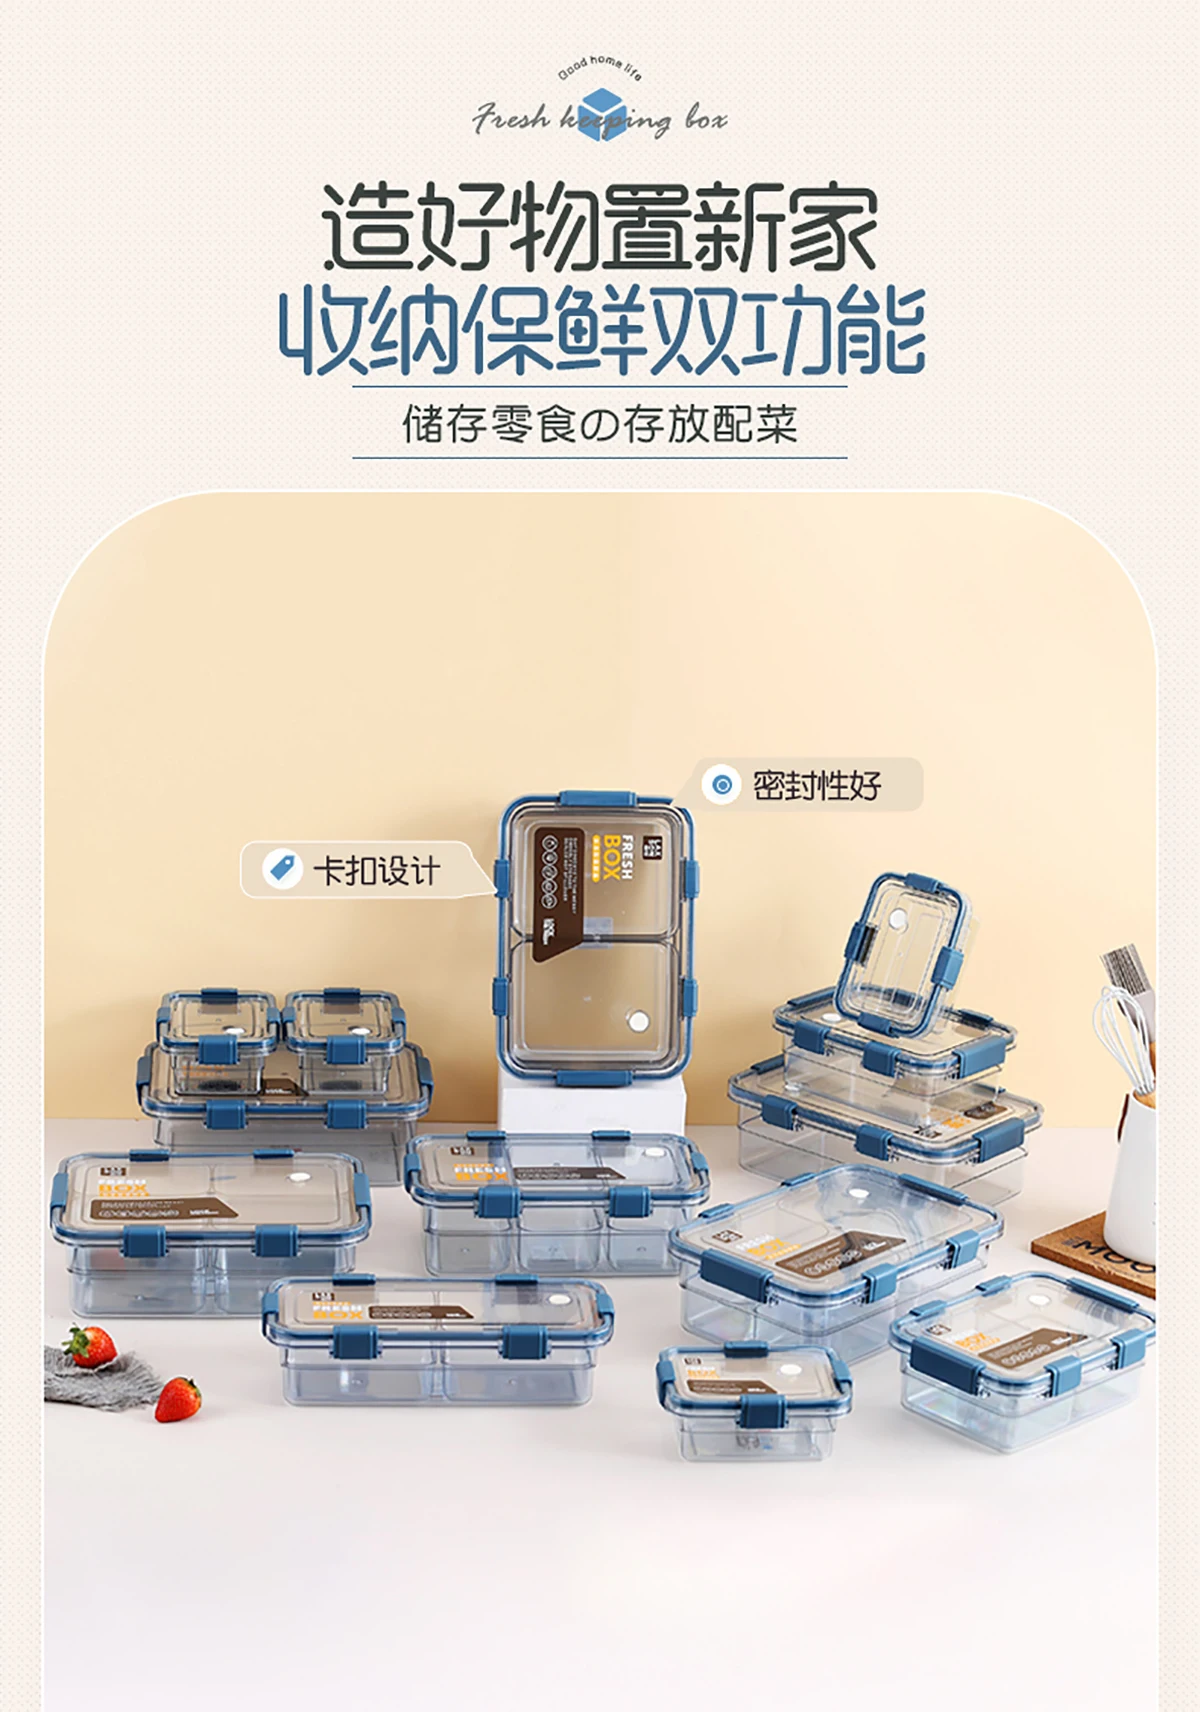 Plastic Sealed Box 3pcs Transparent Takeaway Box Set with Lock Fresh Container 450ml + 2600ml